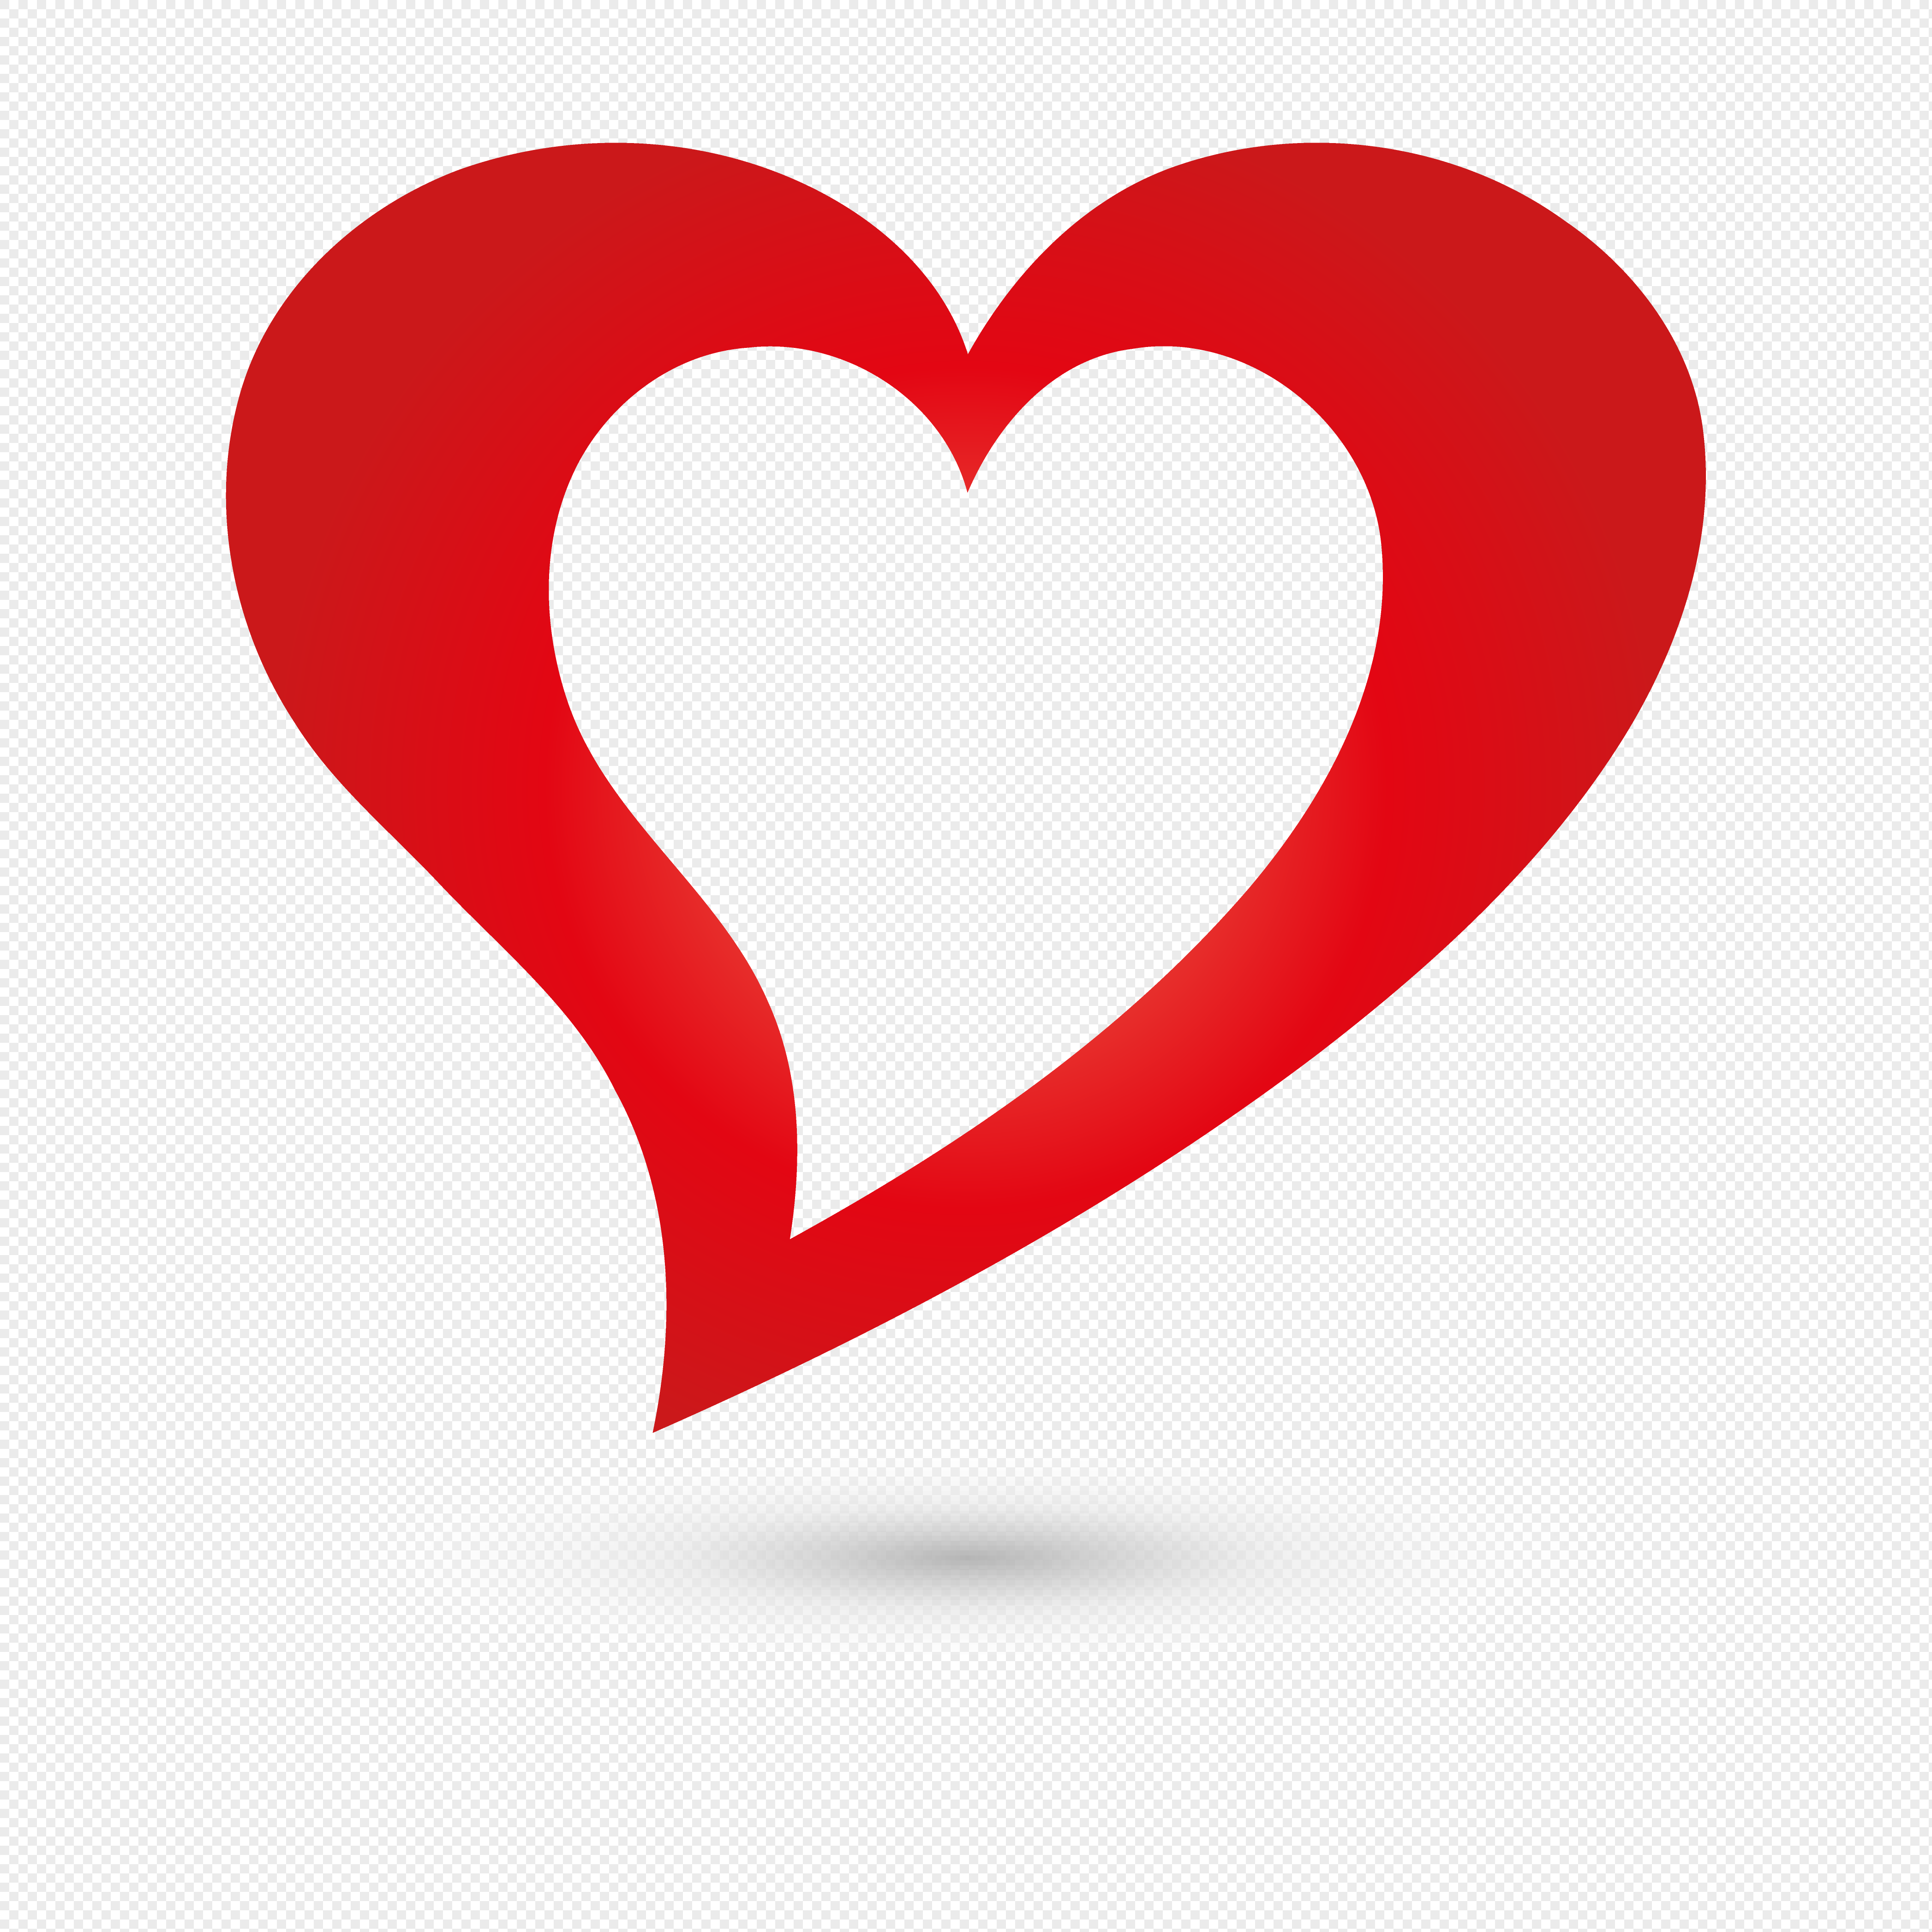 illustrator heart vector download